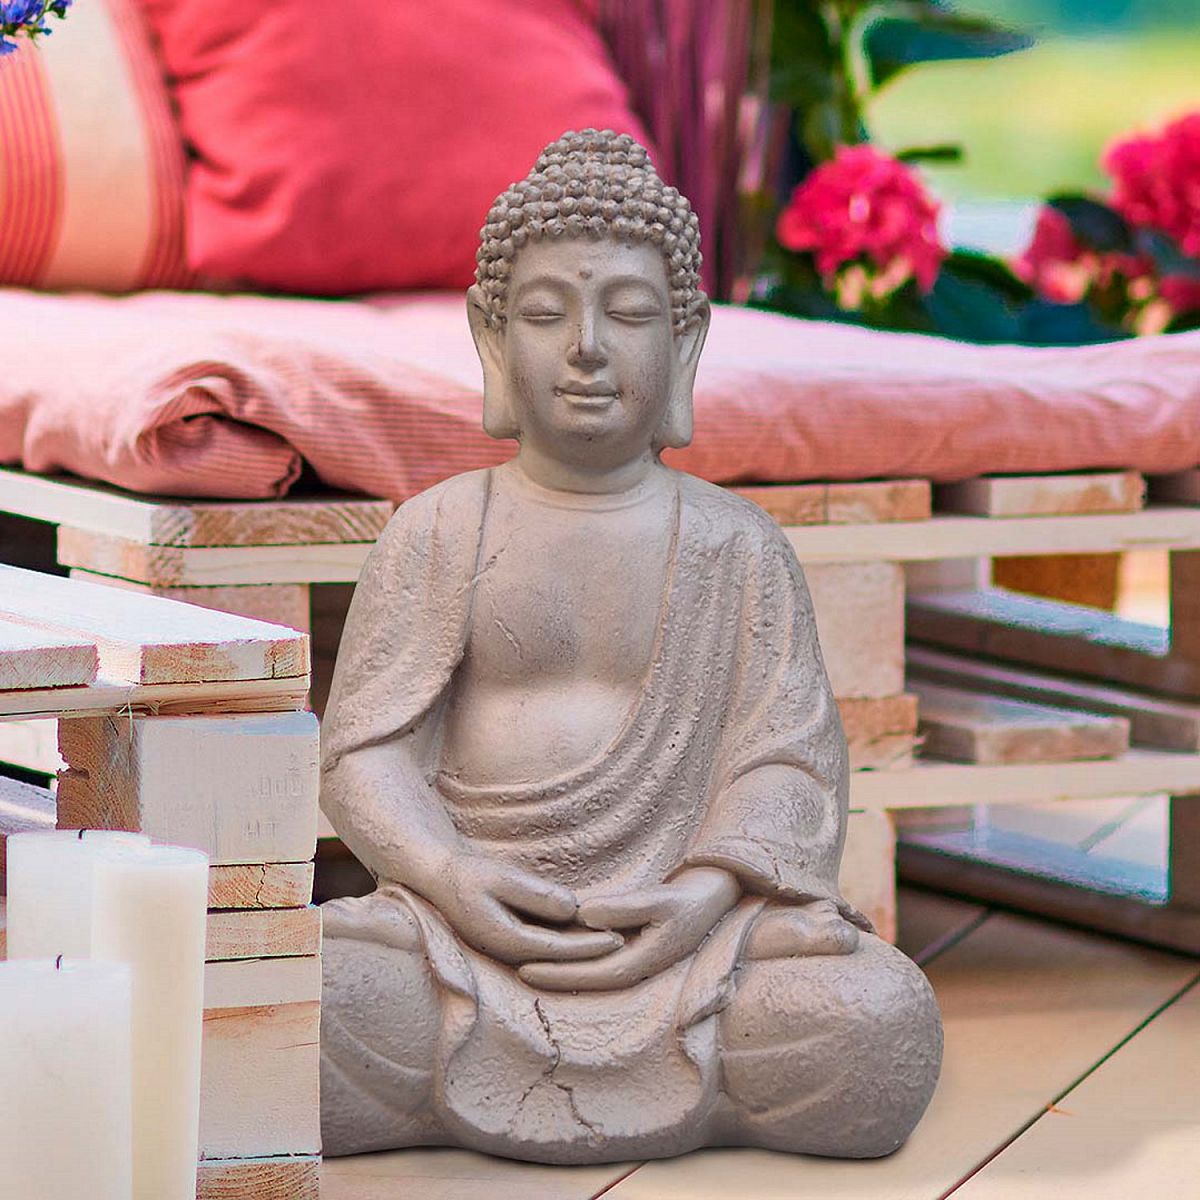 IDEALIST Lite Buddha Sitting in Mediation Brown Indoor and Outdoor Statue L30 W24 H41 cm